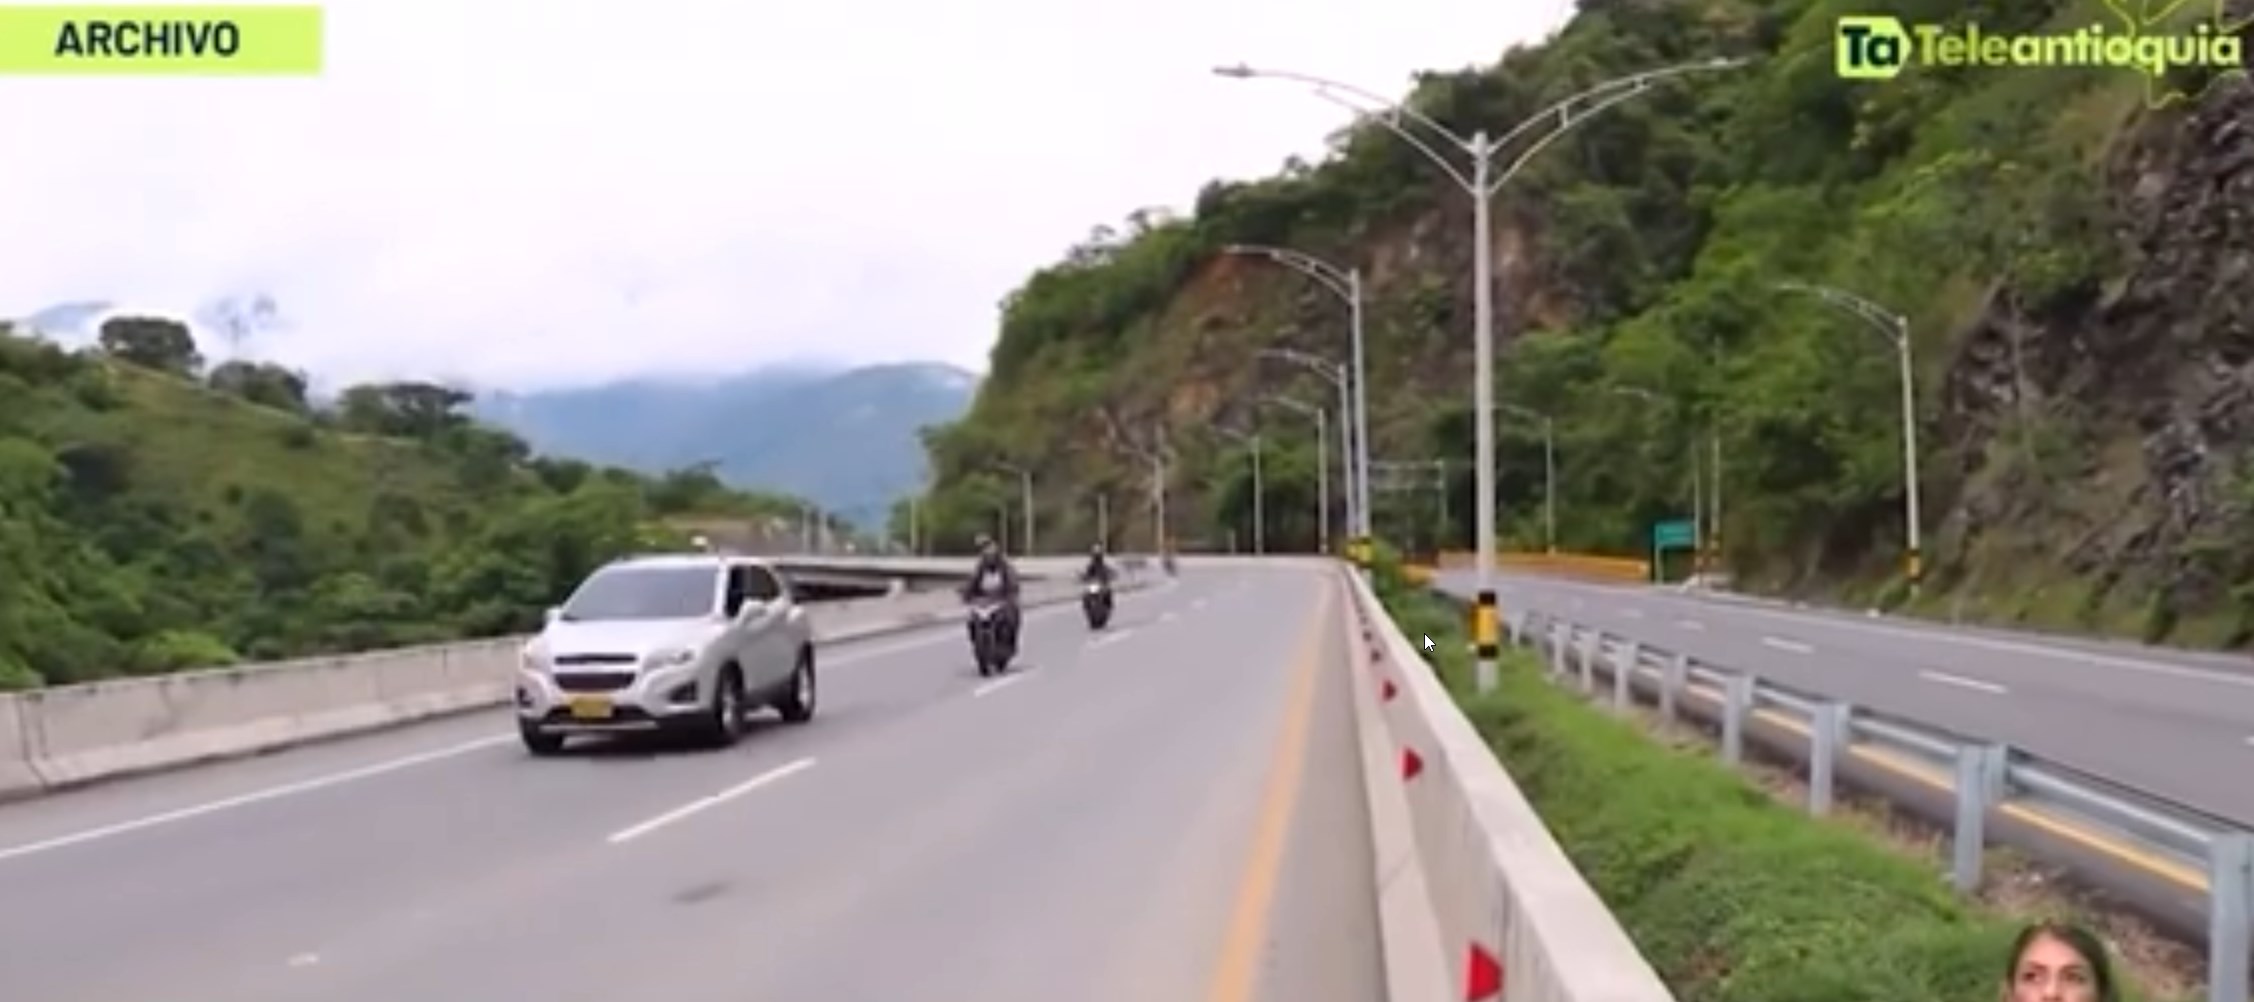 Deslizamientos bloquean vías en Antioquia